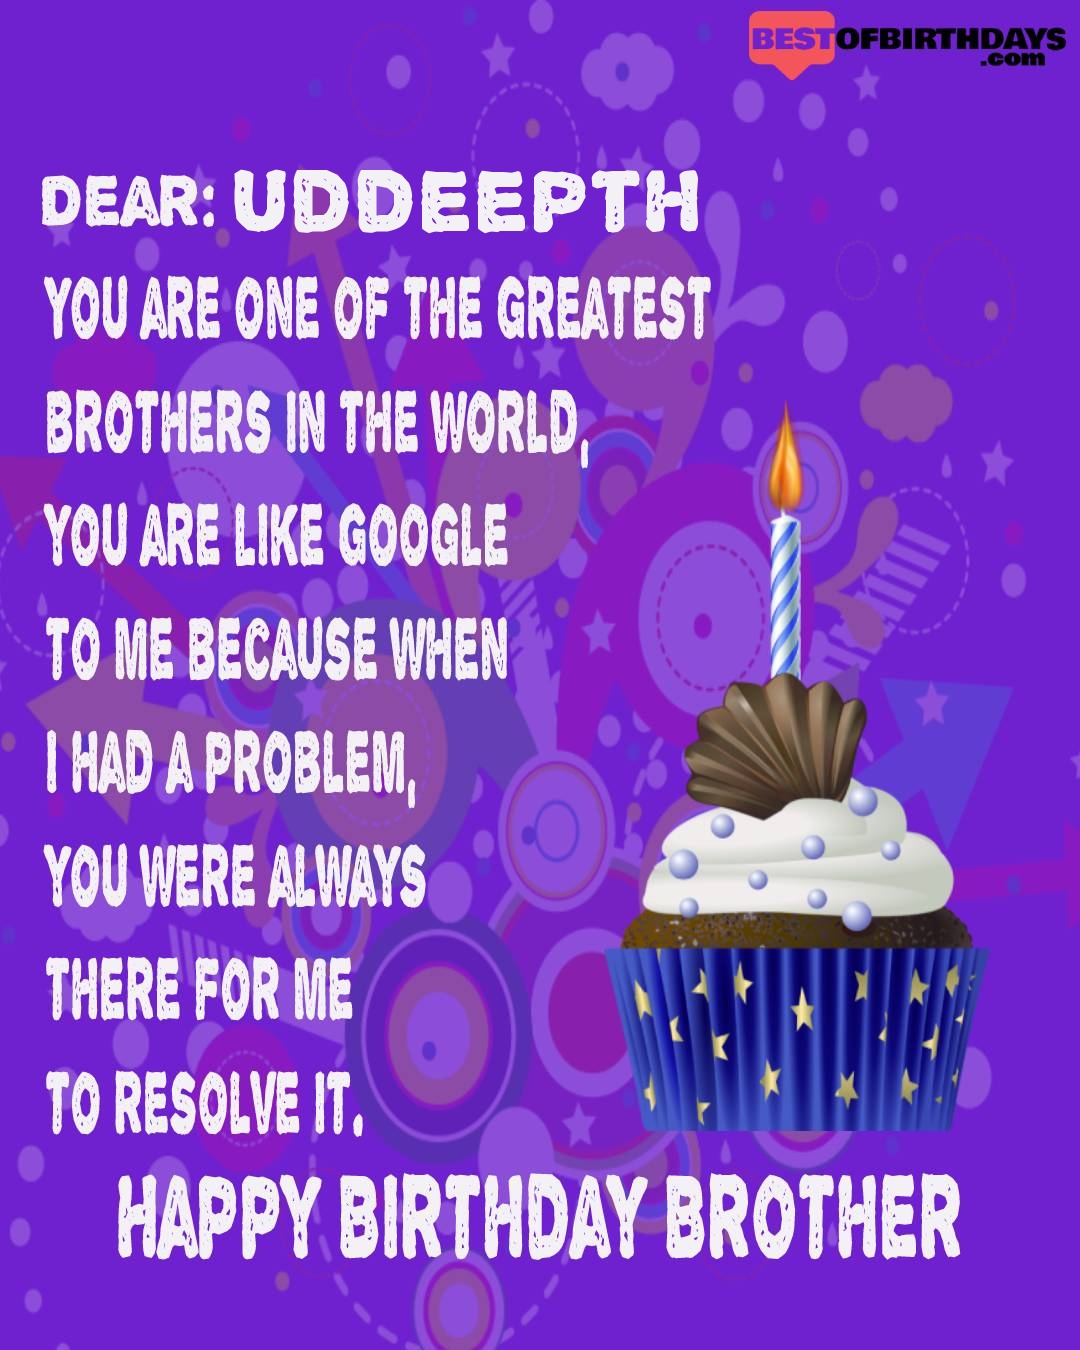 Happy birthday uddeepth bhai brother bro